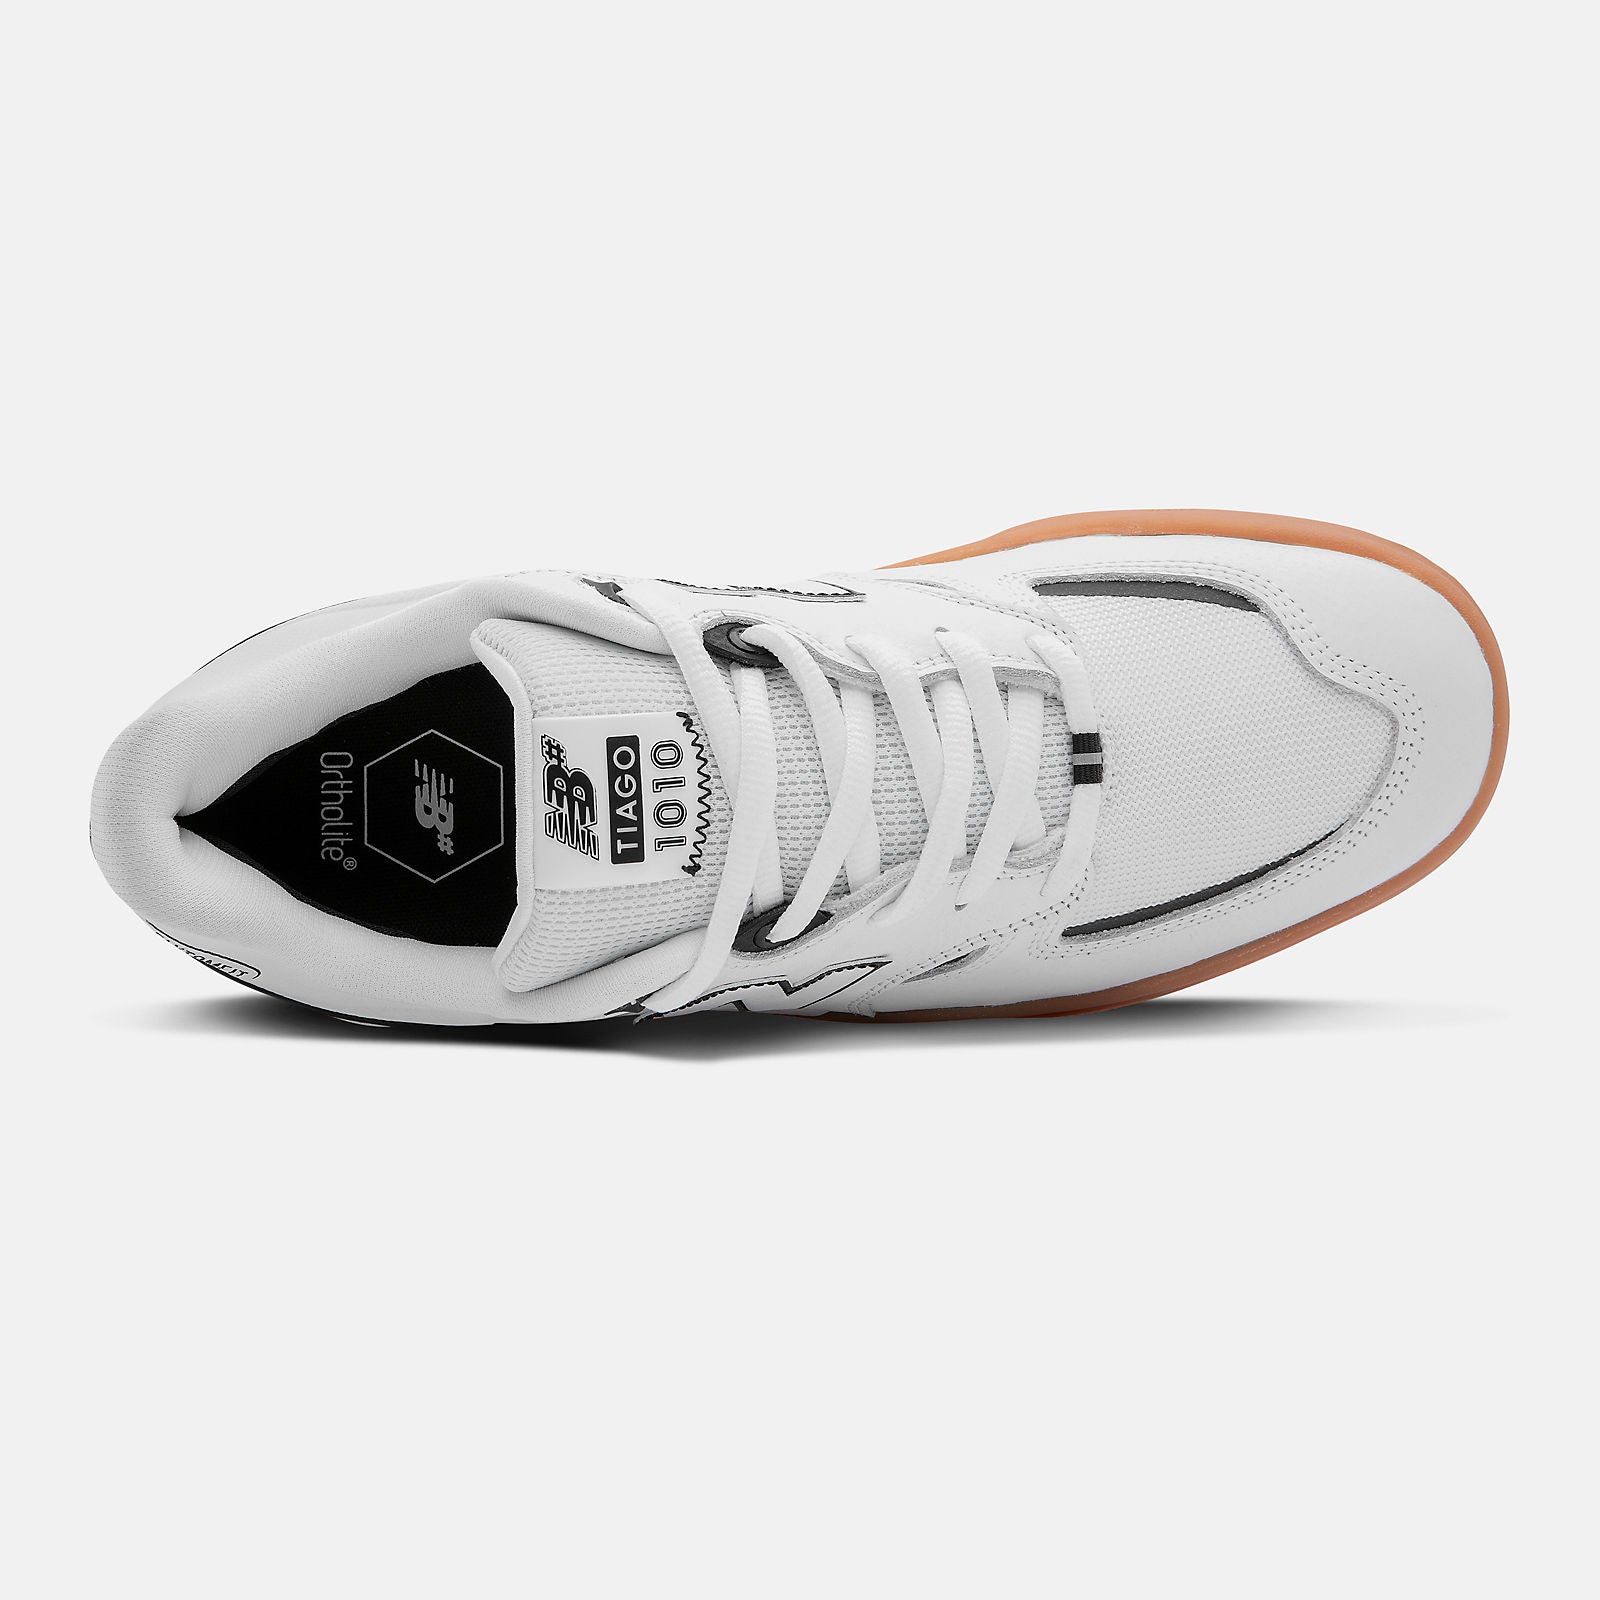 White Leather NM1010GB Tiago NB Numeric Skateboarding Shoe Top